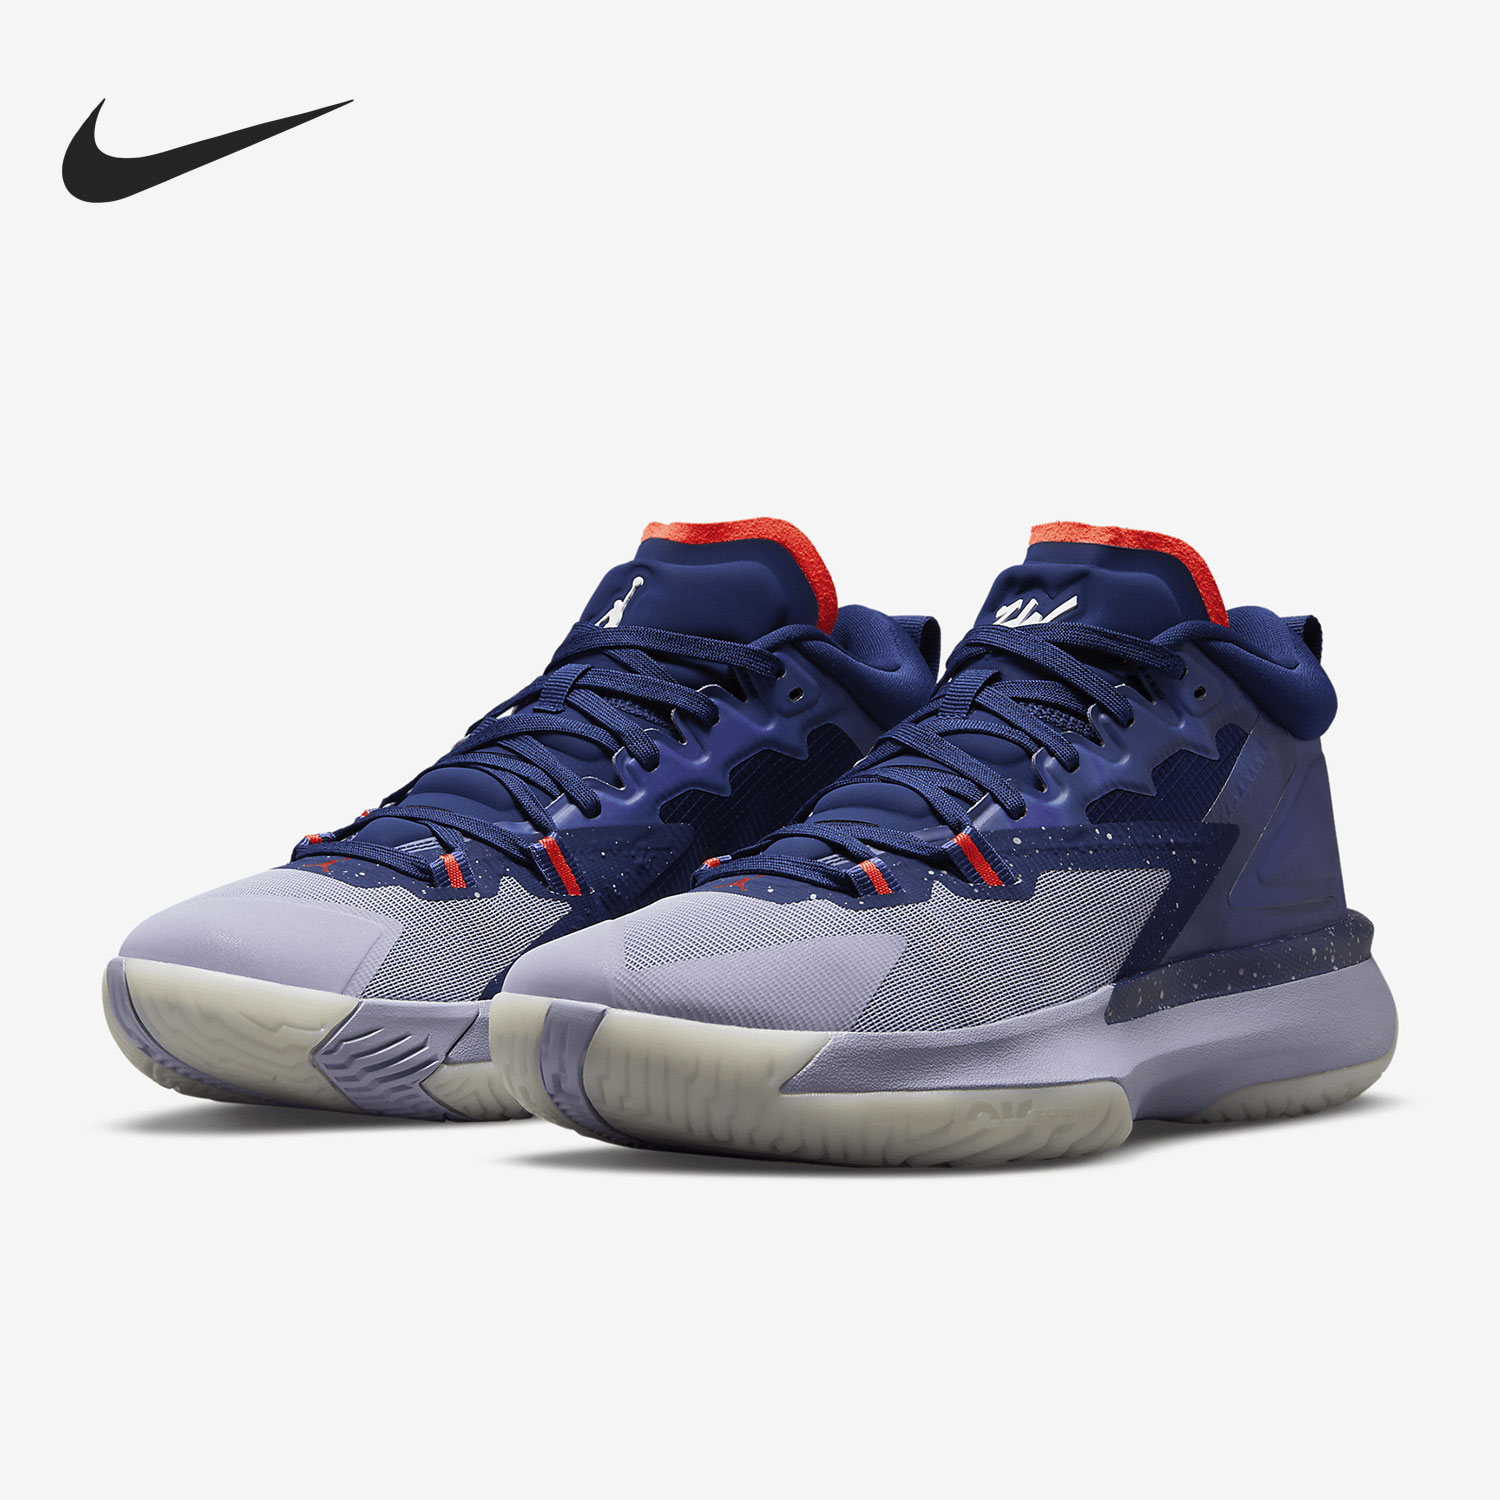 Nike/耐克正品 AIR JORDAN ZION 1 PF 男子缓震篮球鞋DA3129-400 运动鞋new 篮球鞋 原图主图